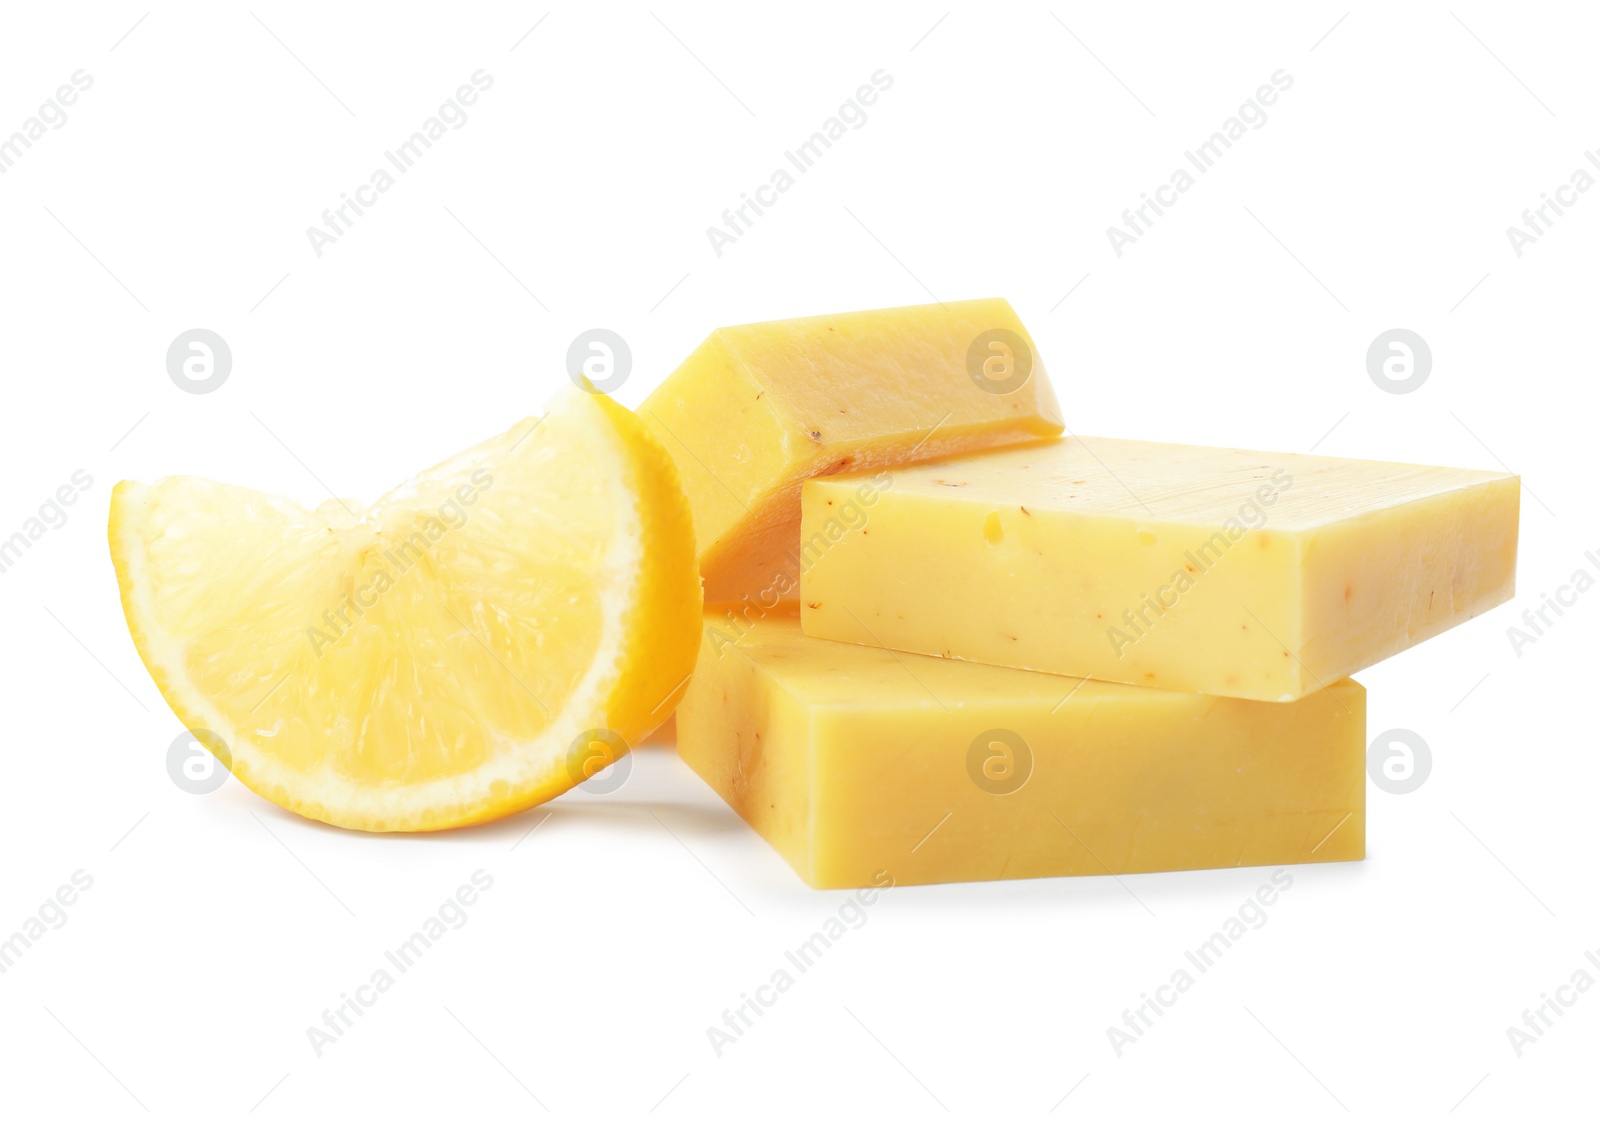 Photo of Handmade soap bars and lemon on white background